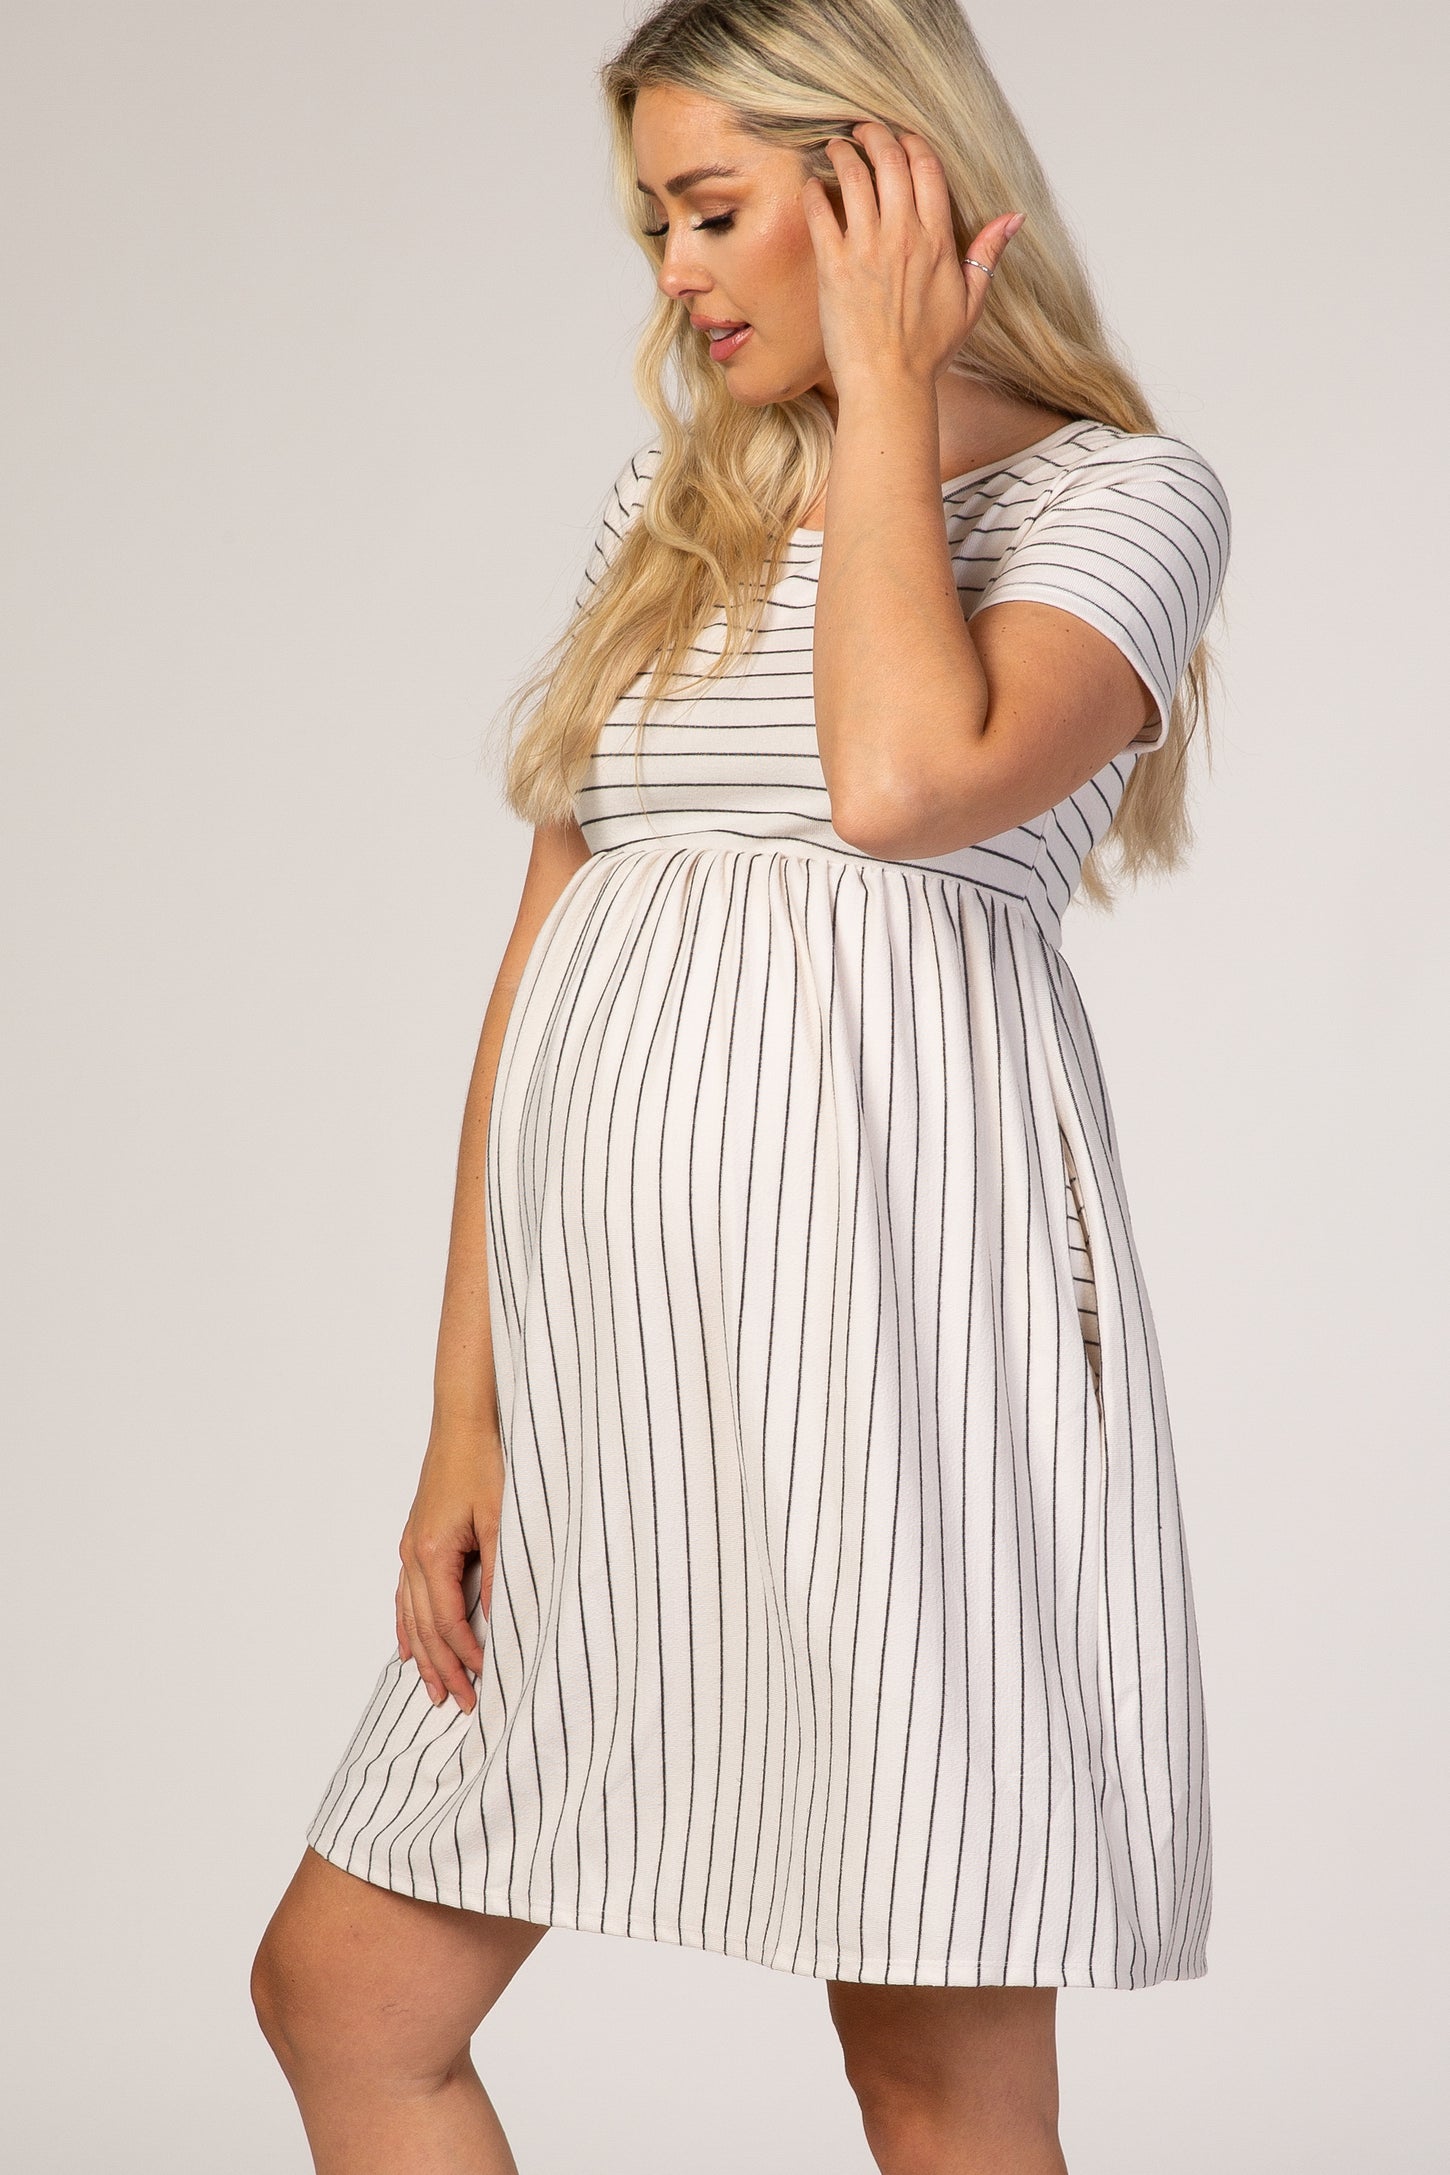 White Striped Maternity Babydoll Dress